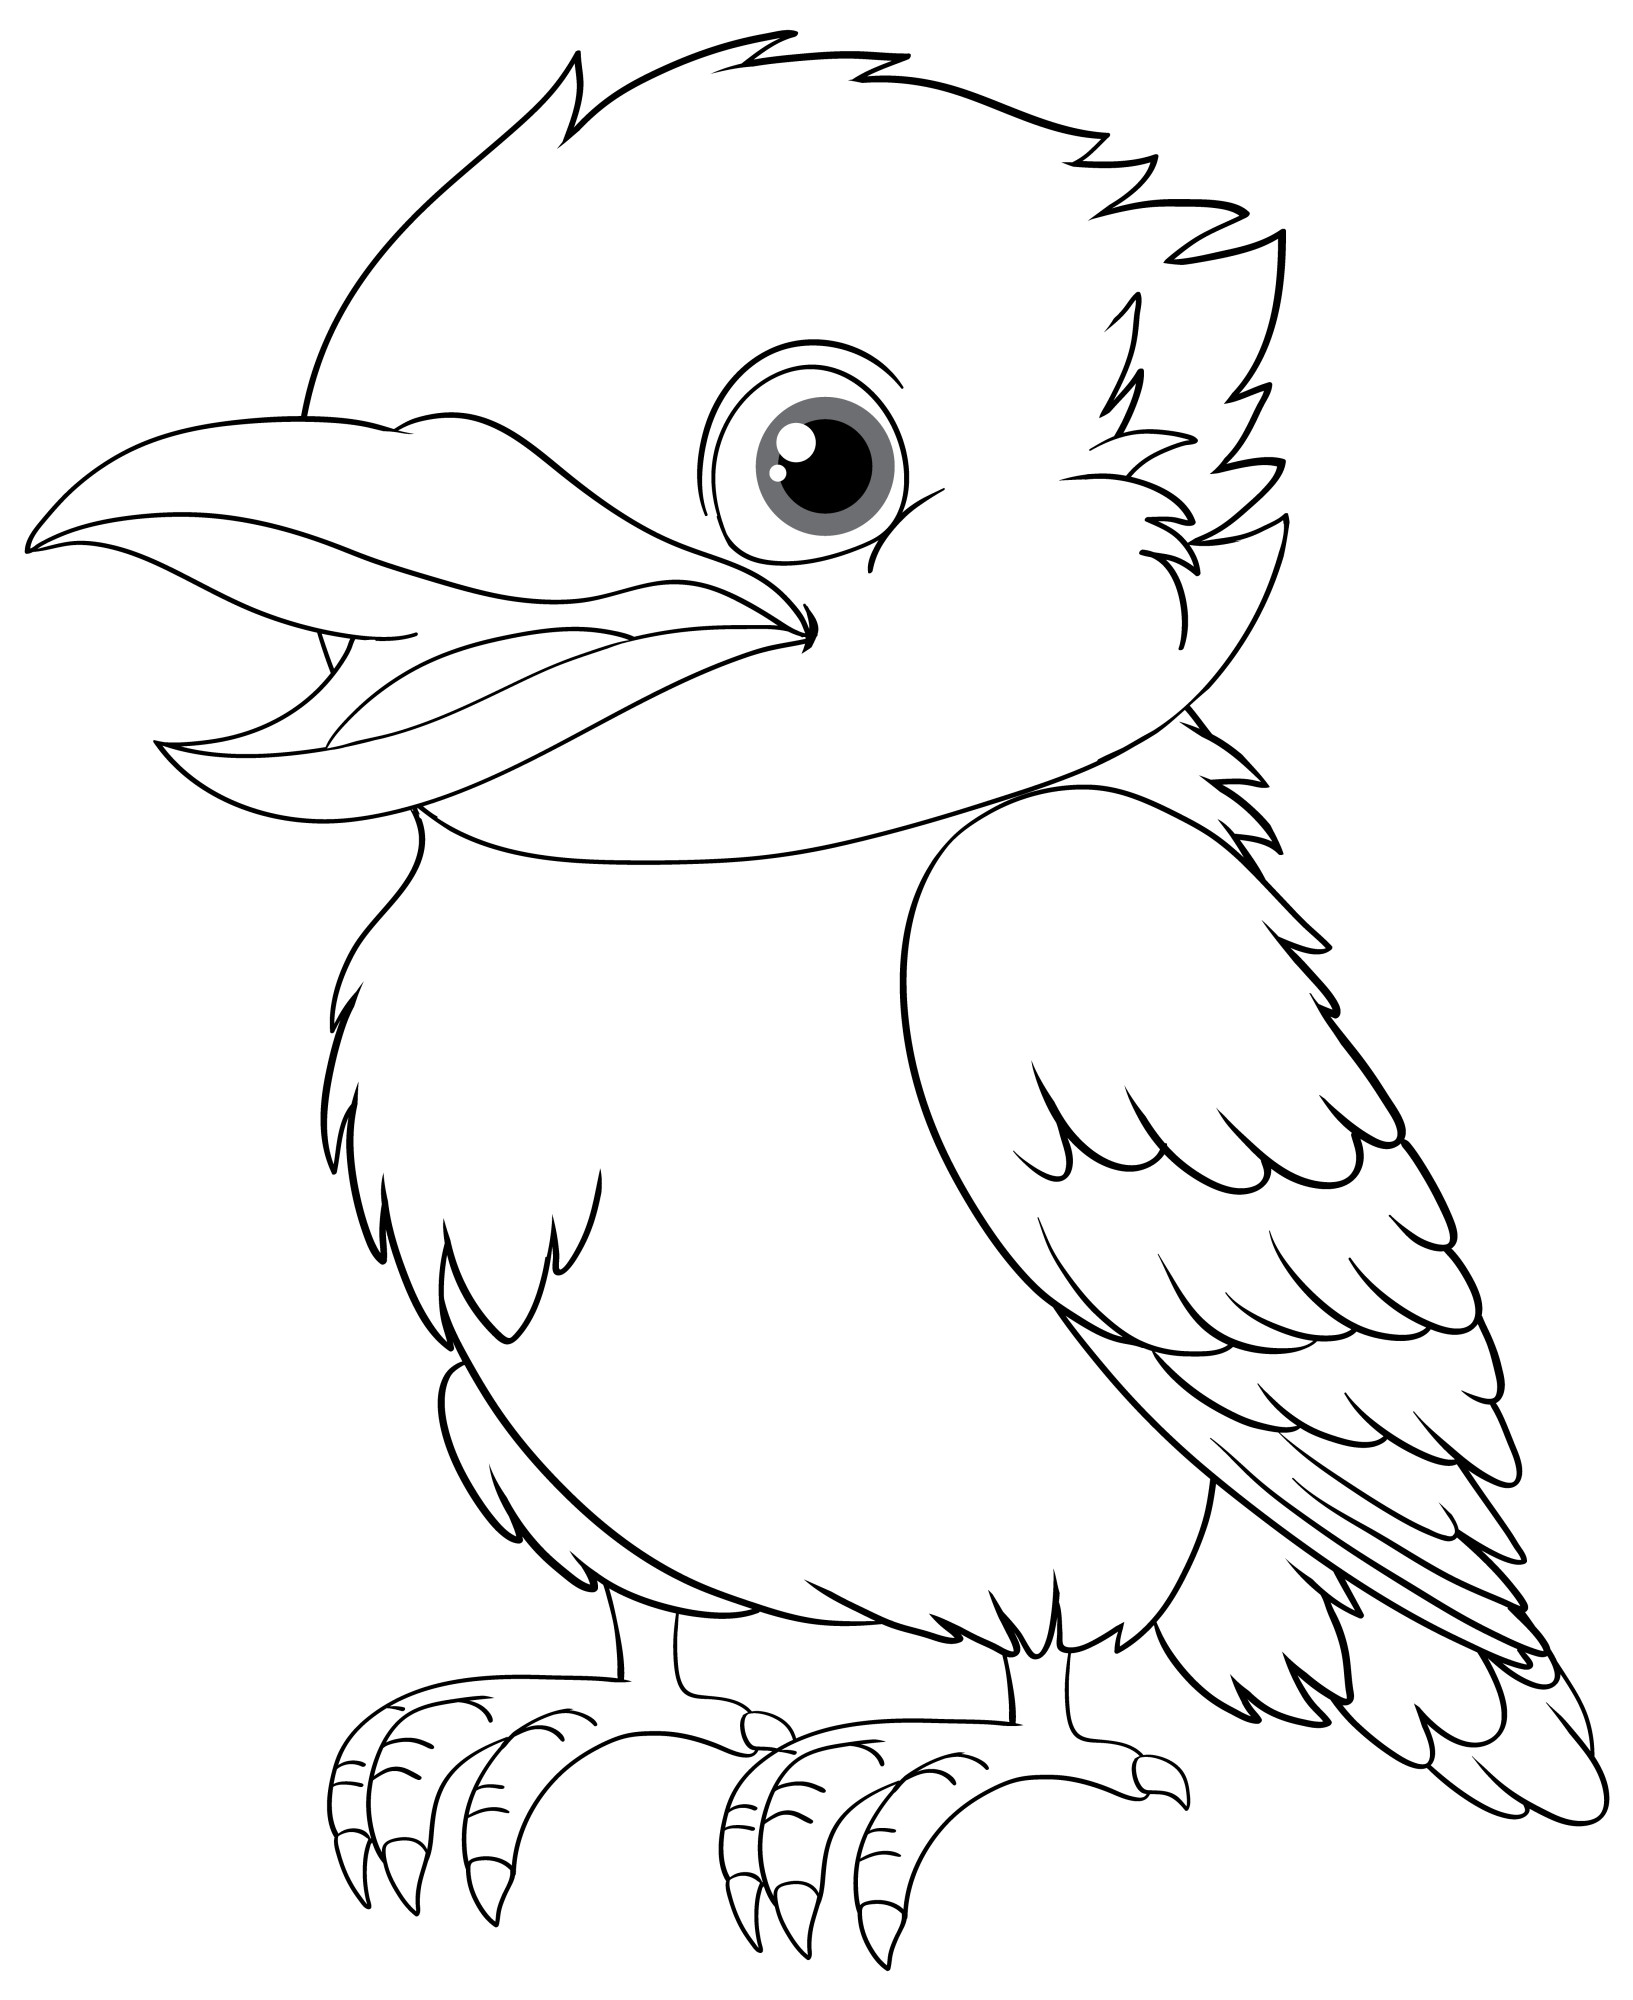 Раскраска для детей: птица кукабара